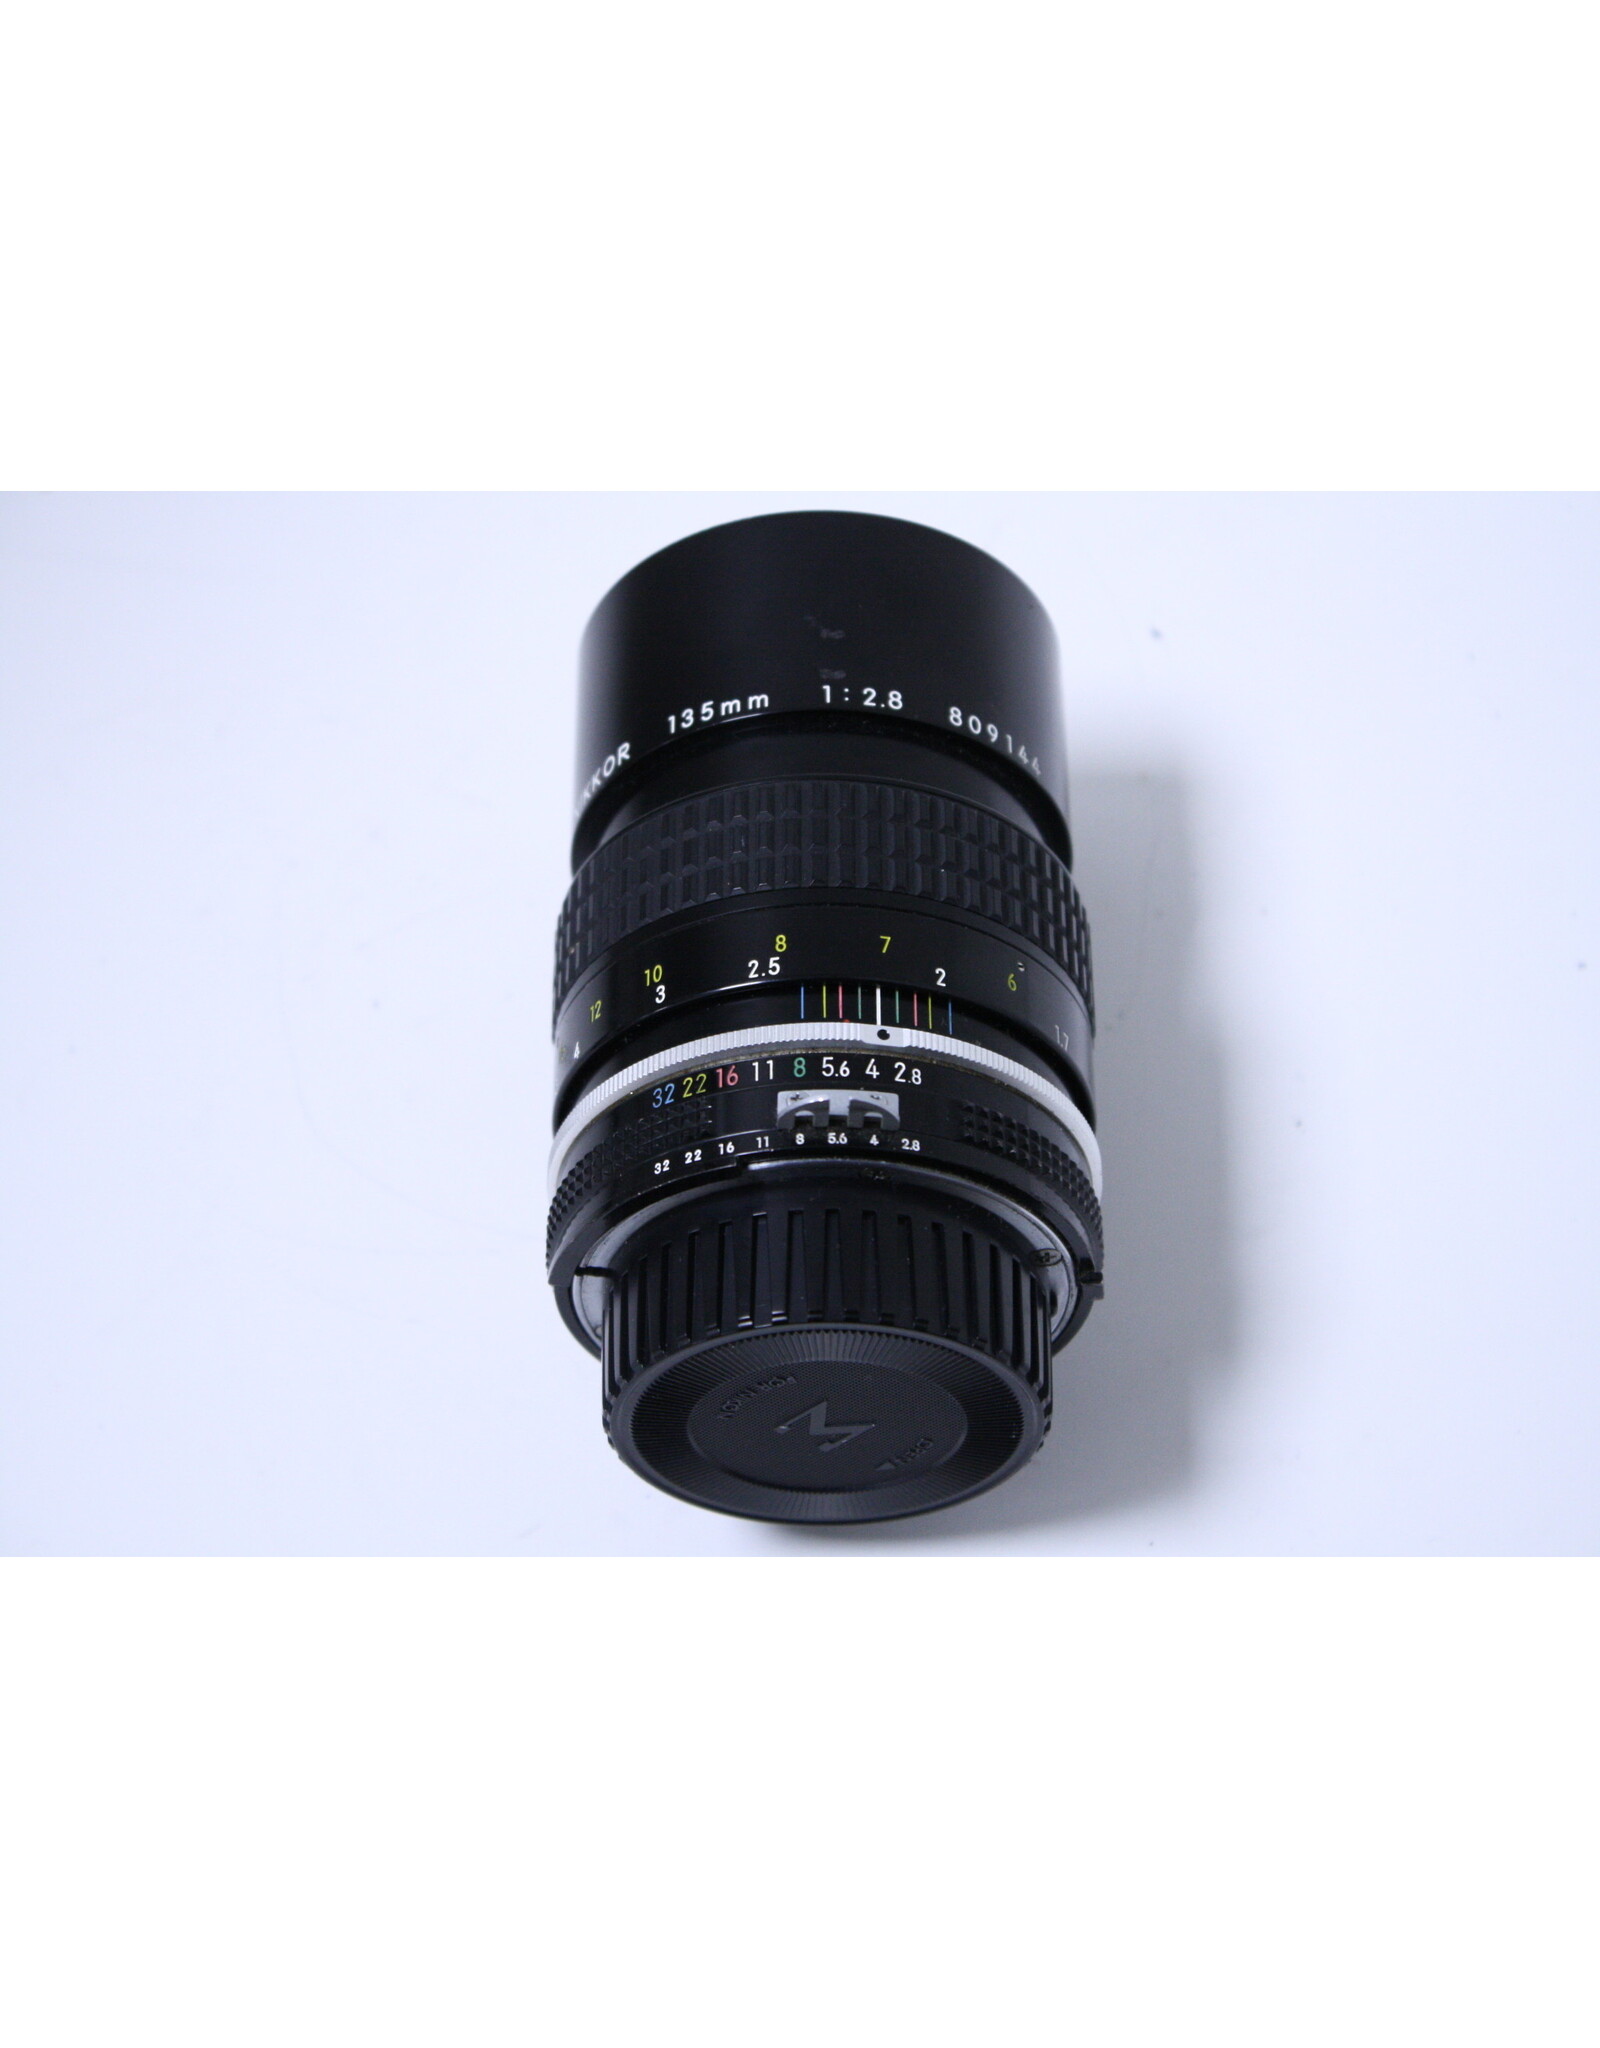 Nikon Nikkor 135mm 1:2.8 Film Camera Lens (Pre-owned)